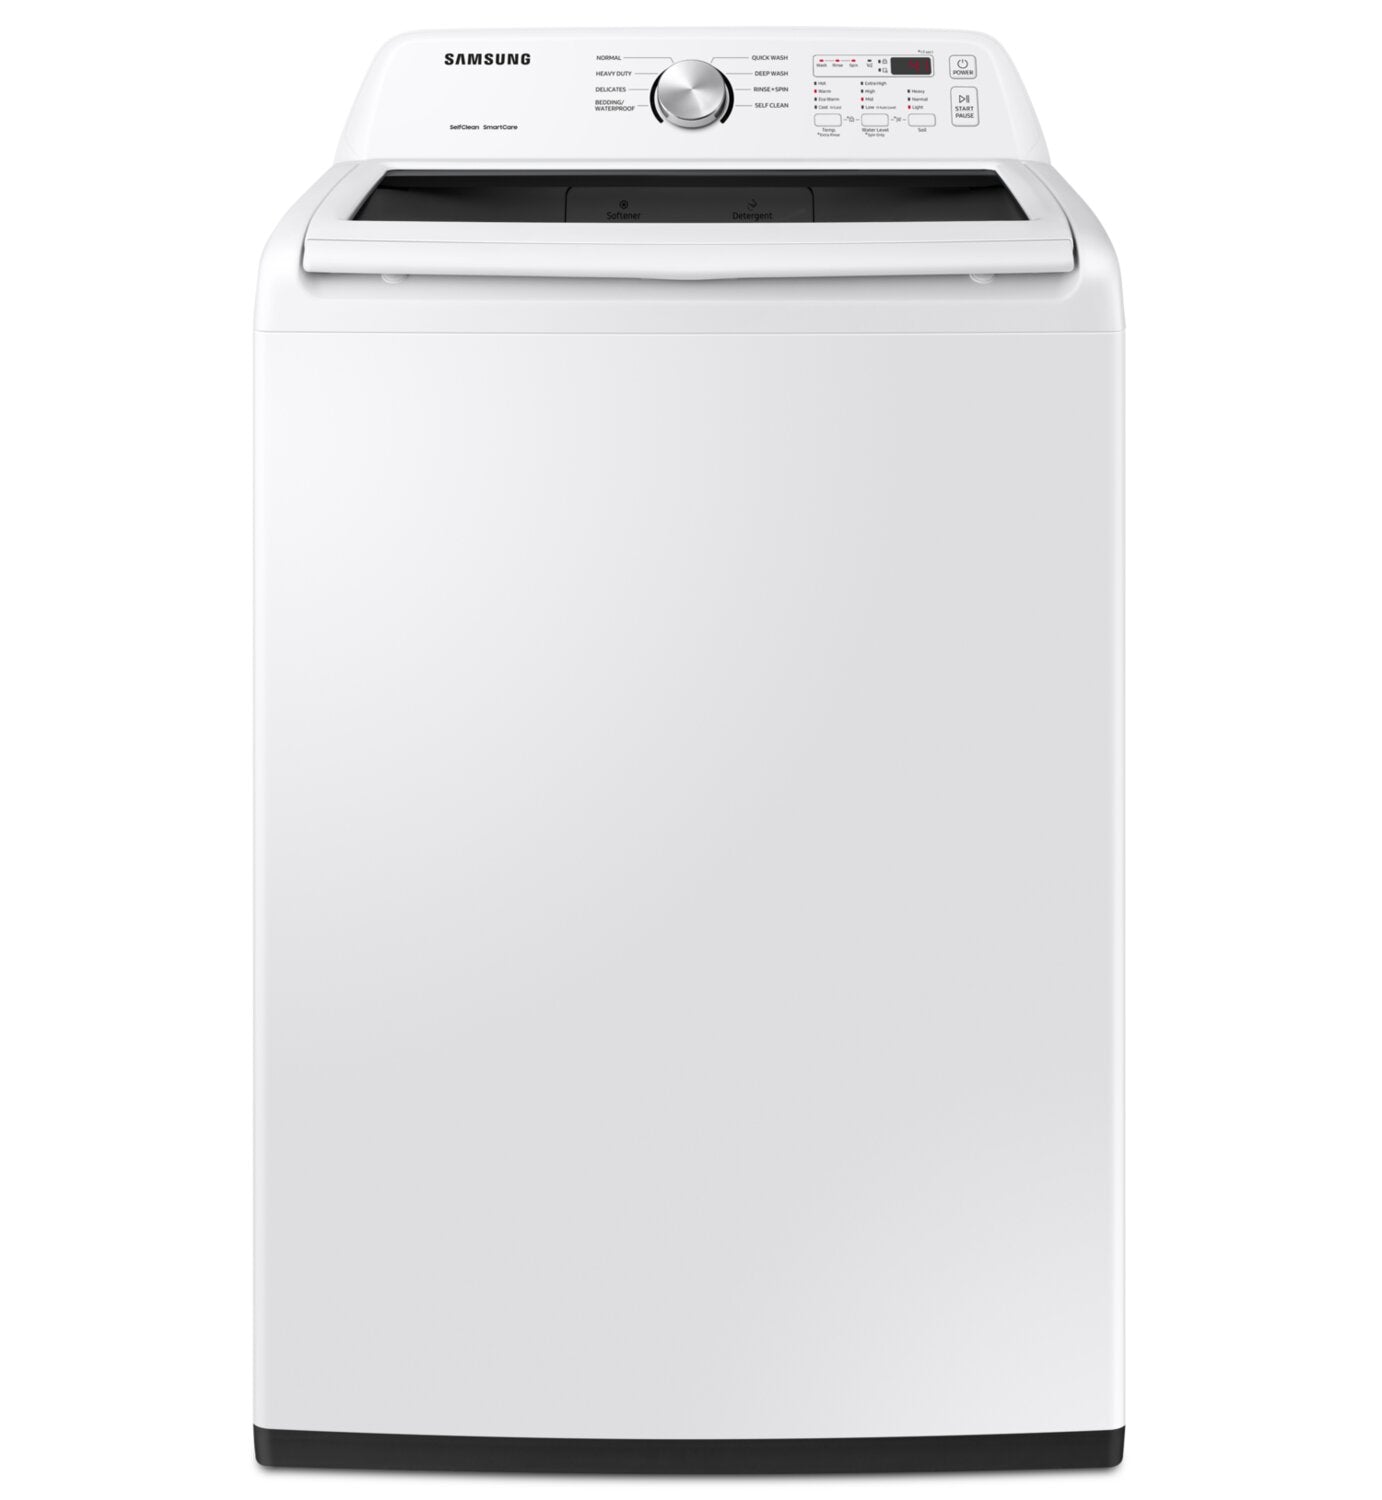 Machine à laver mobile de 1,8 pi3 – Canada